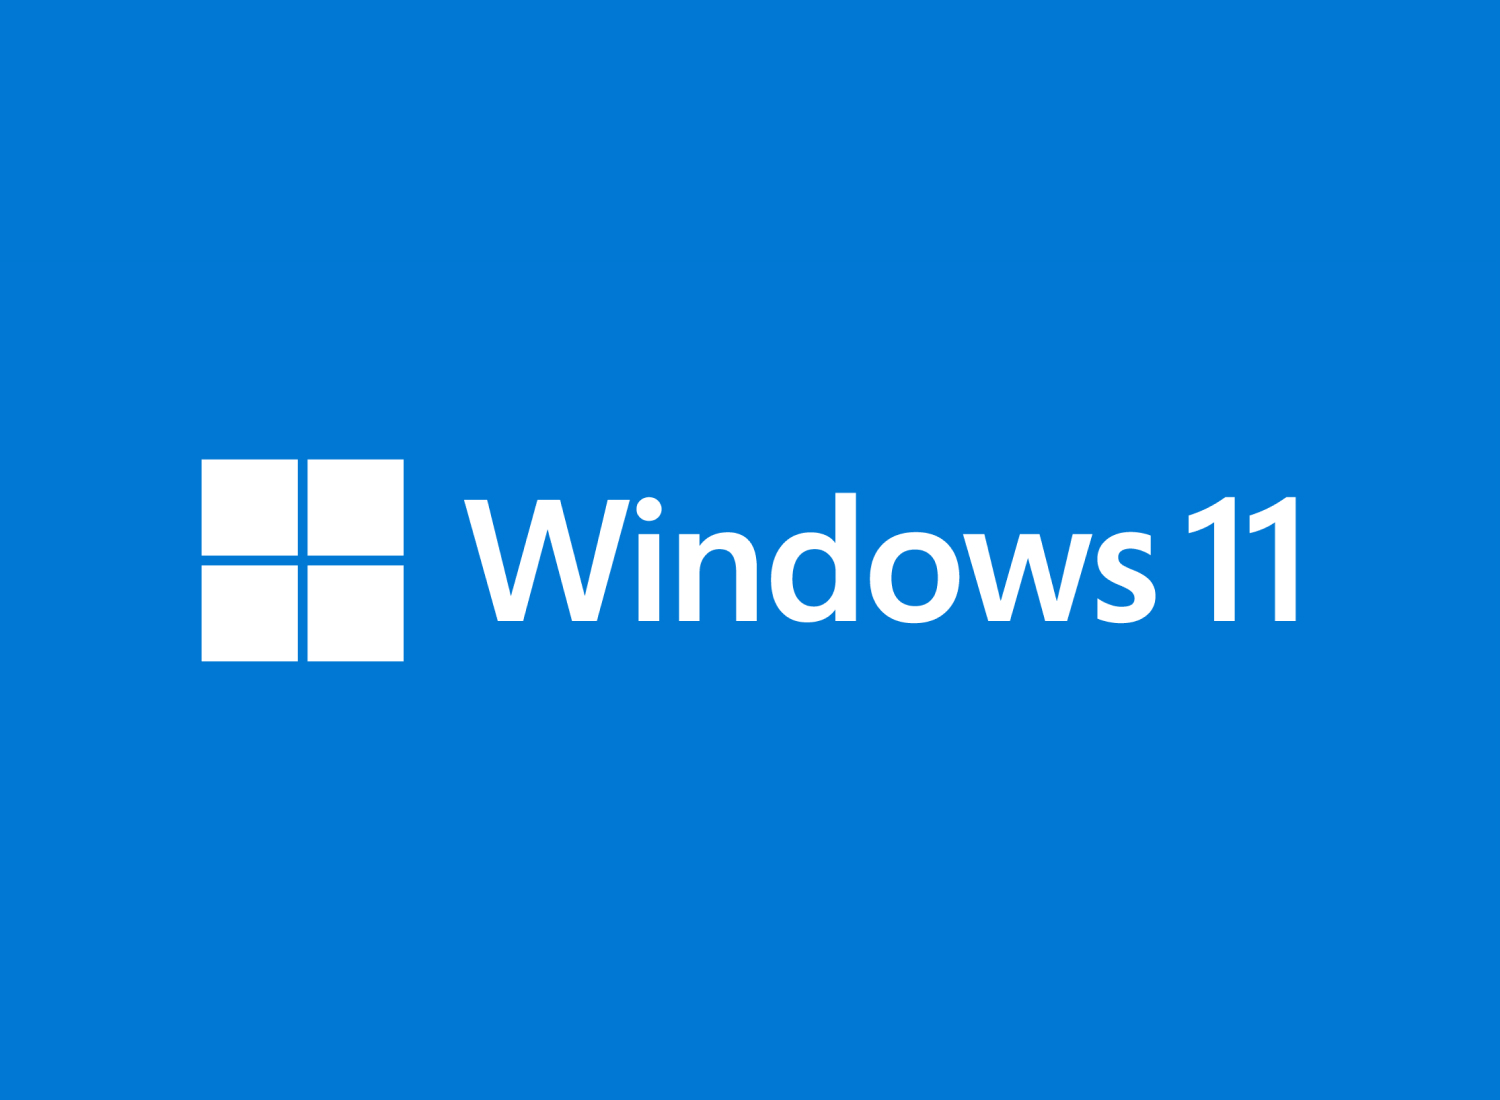 Microsoft launches ad campaign for Windows 11